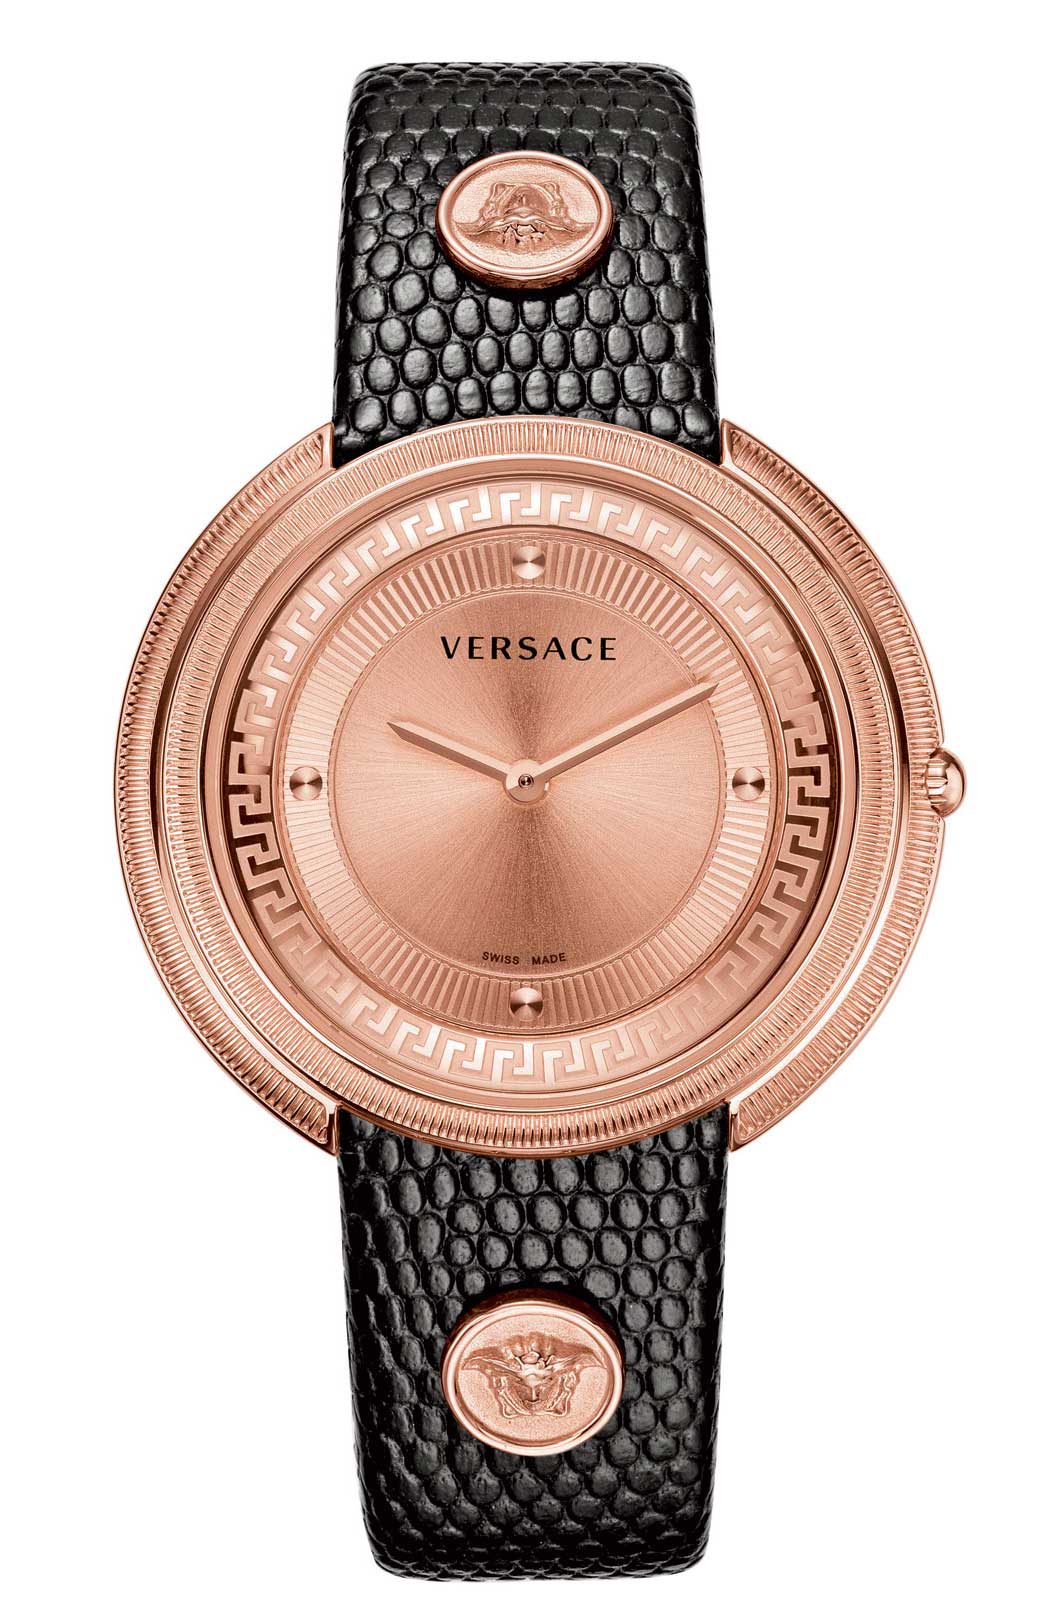 Versace QUARTZ watch 762 GOLD BLACK